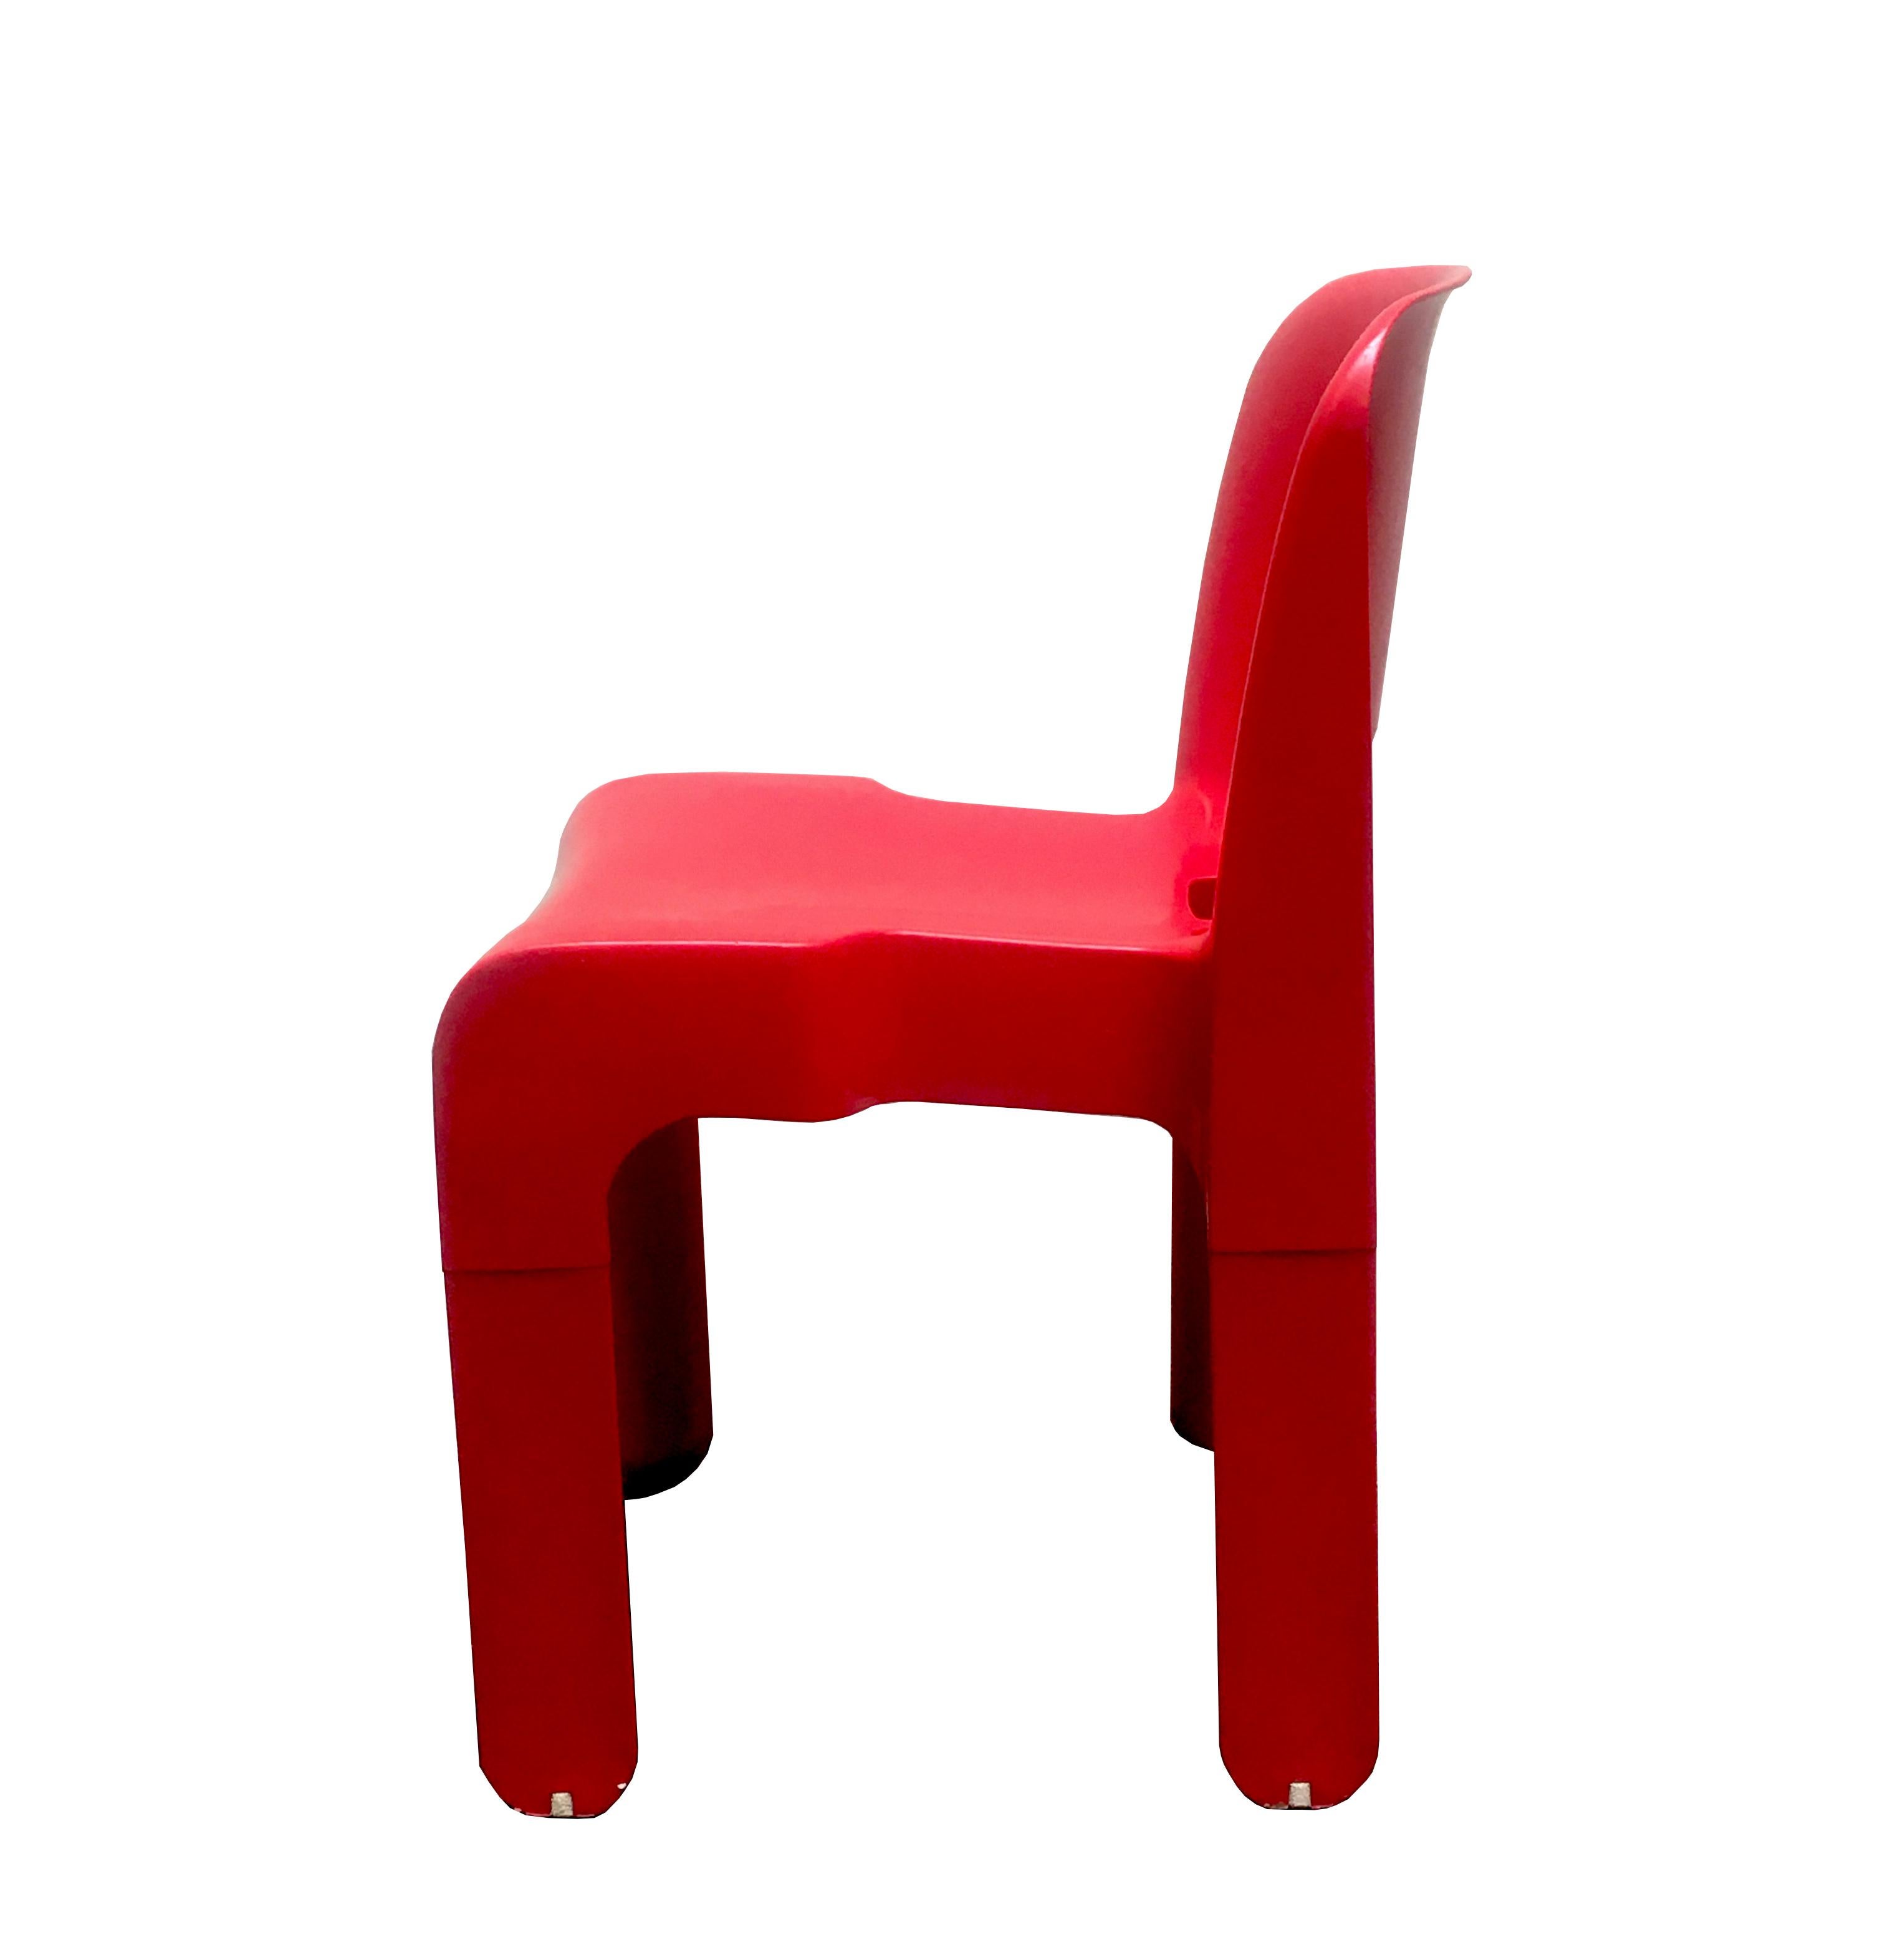 italien Chaise universelle en plastique rouge Joe Colombo de Kartell, Italie, 1967